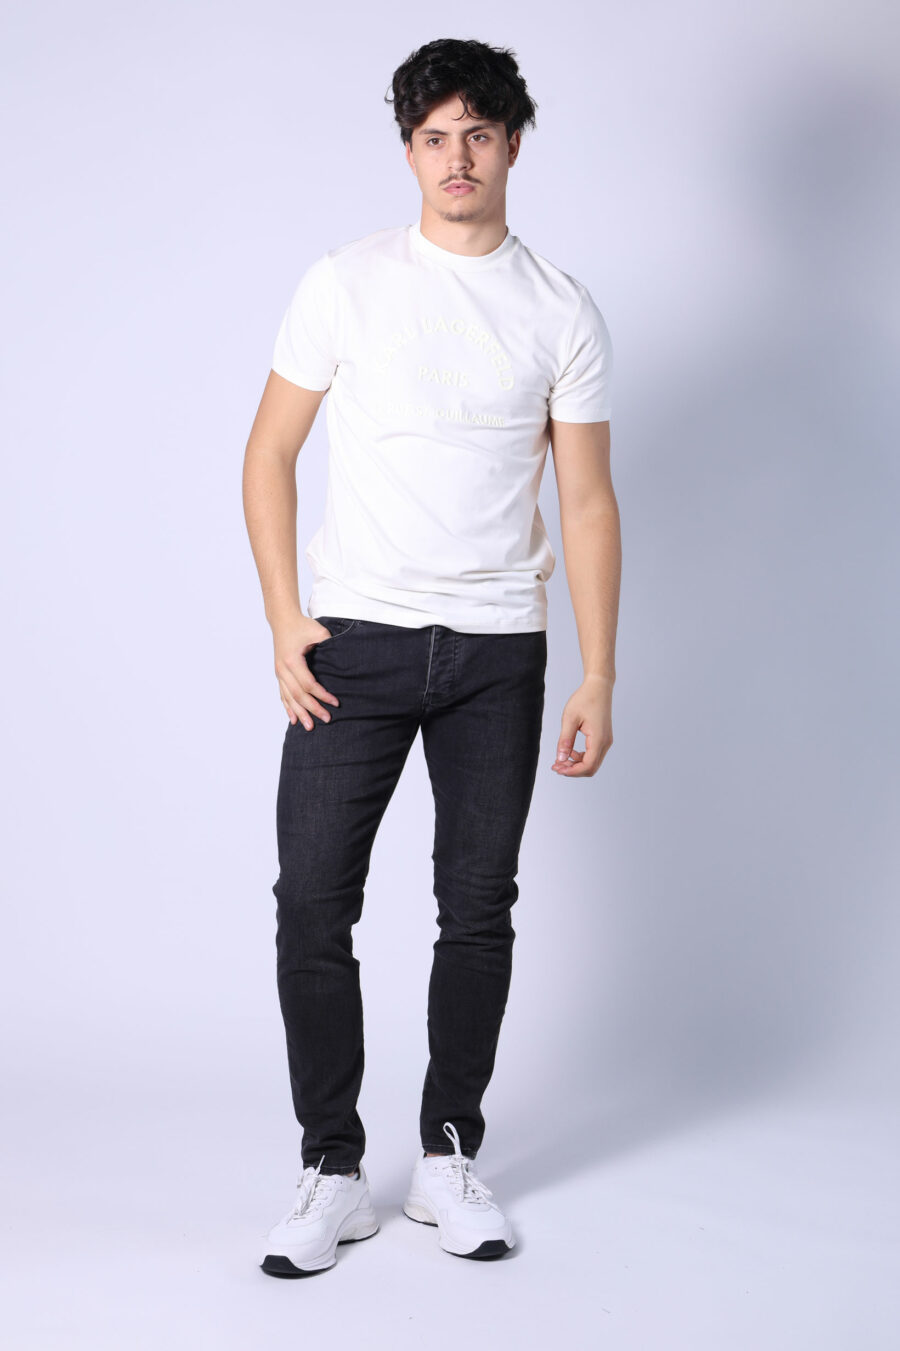 Weißes T-Shirt mit einfarbigem "rue st guillaume" Maxi-Logo - Untitled Catalog 05759